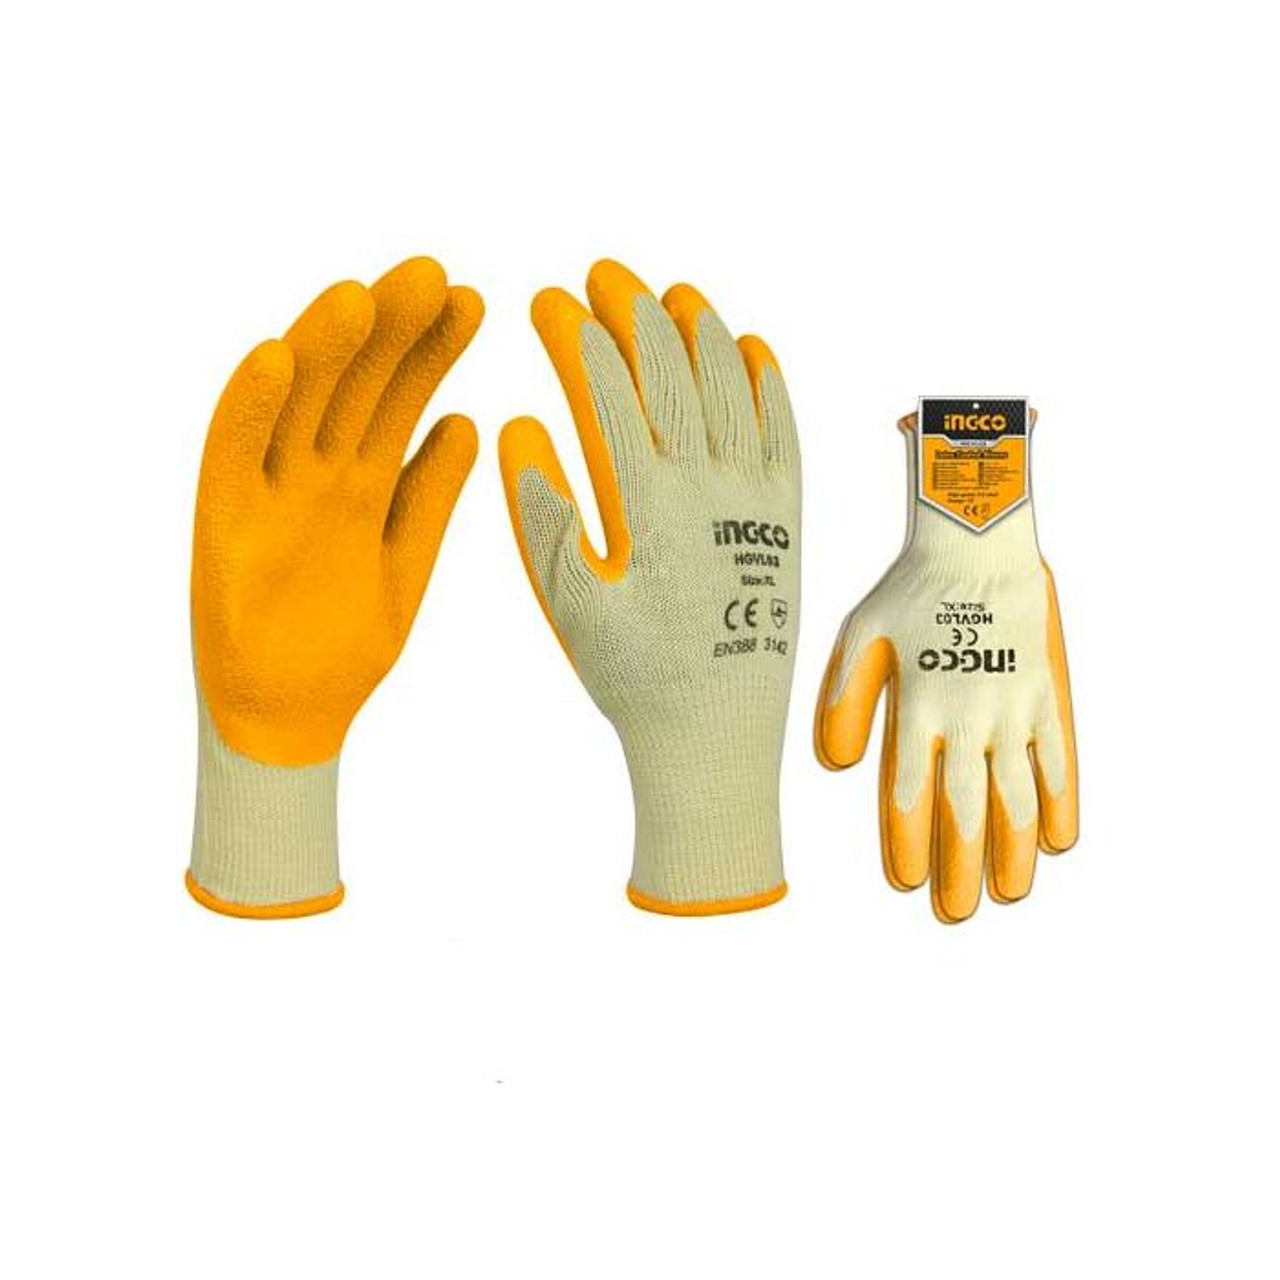 INGCO Latex Gloves HGVL03